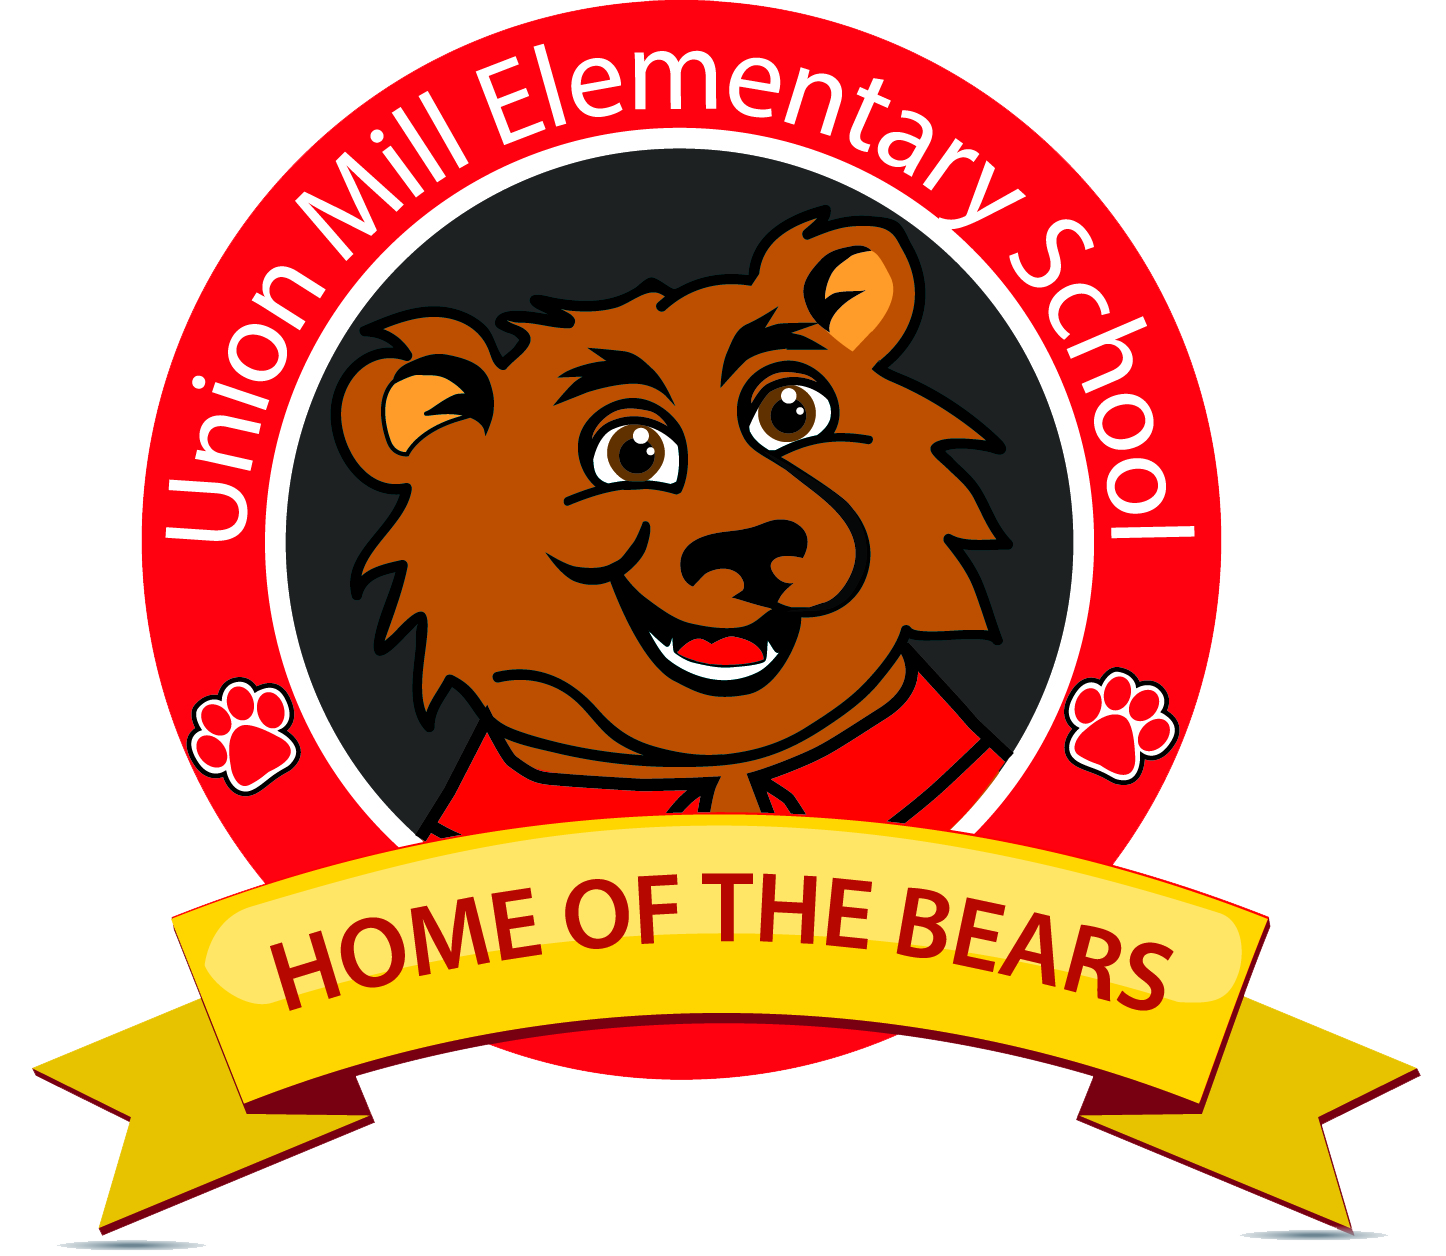 Union Mill Elementary School logo